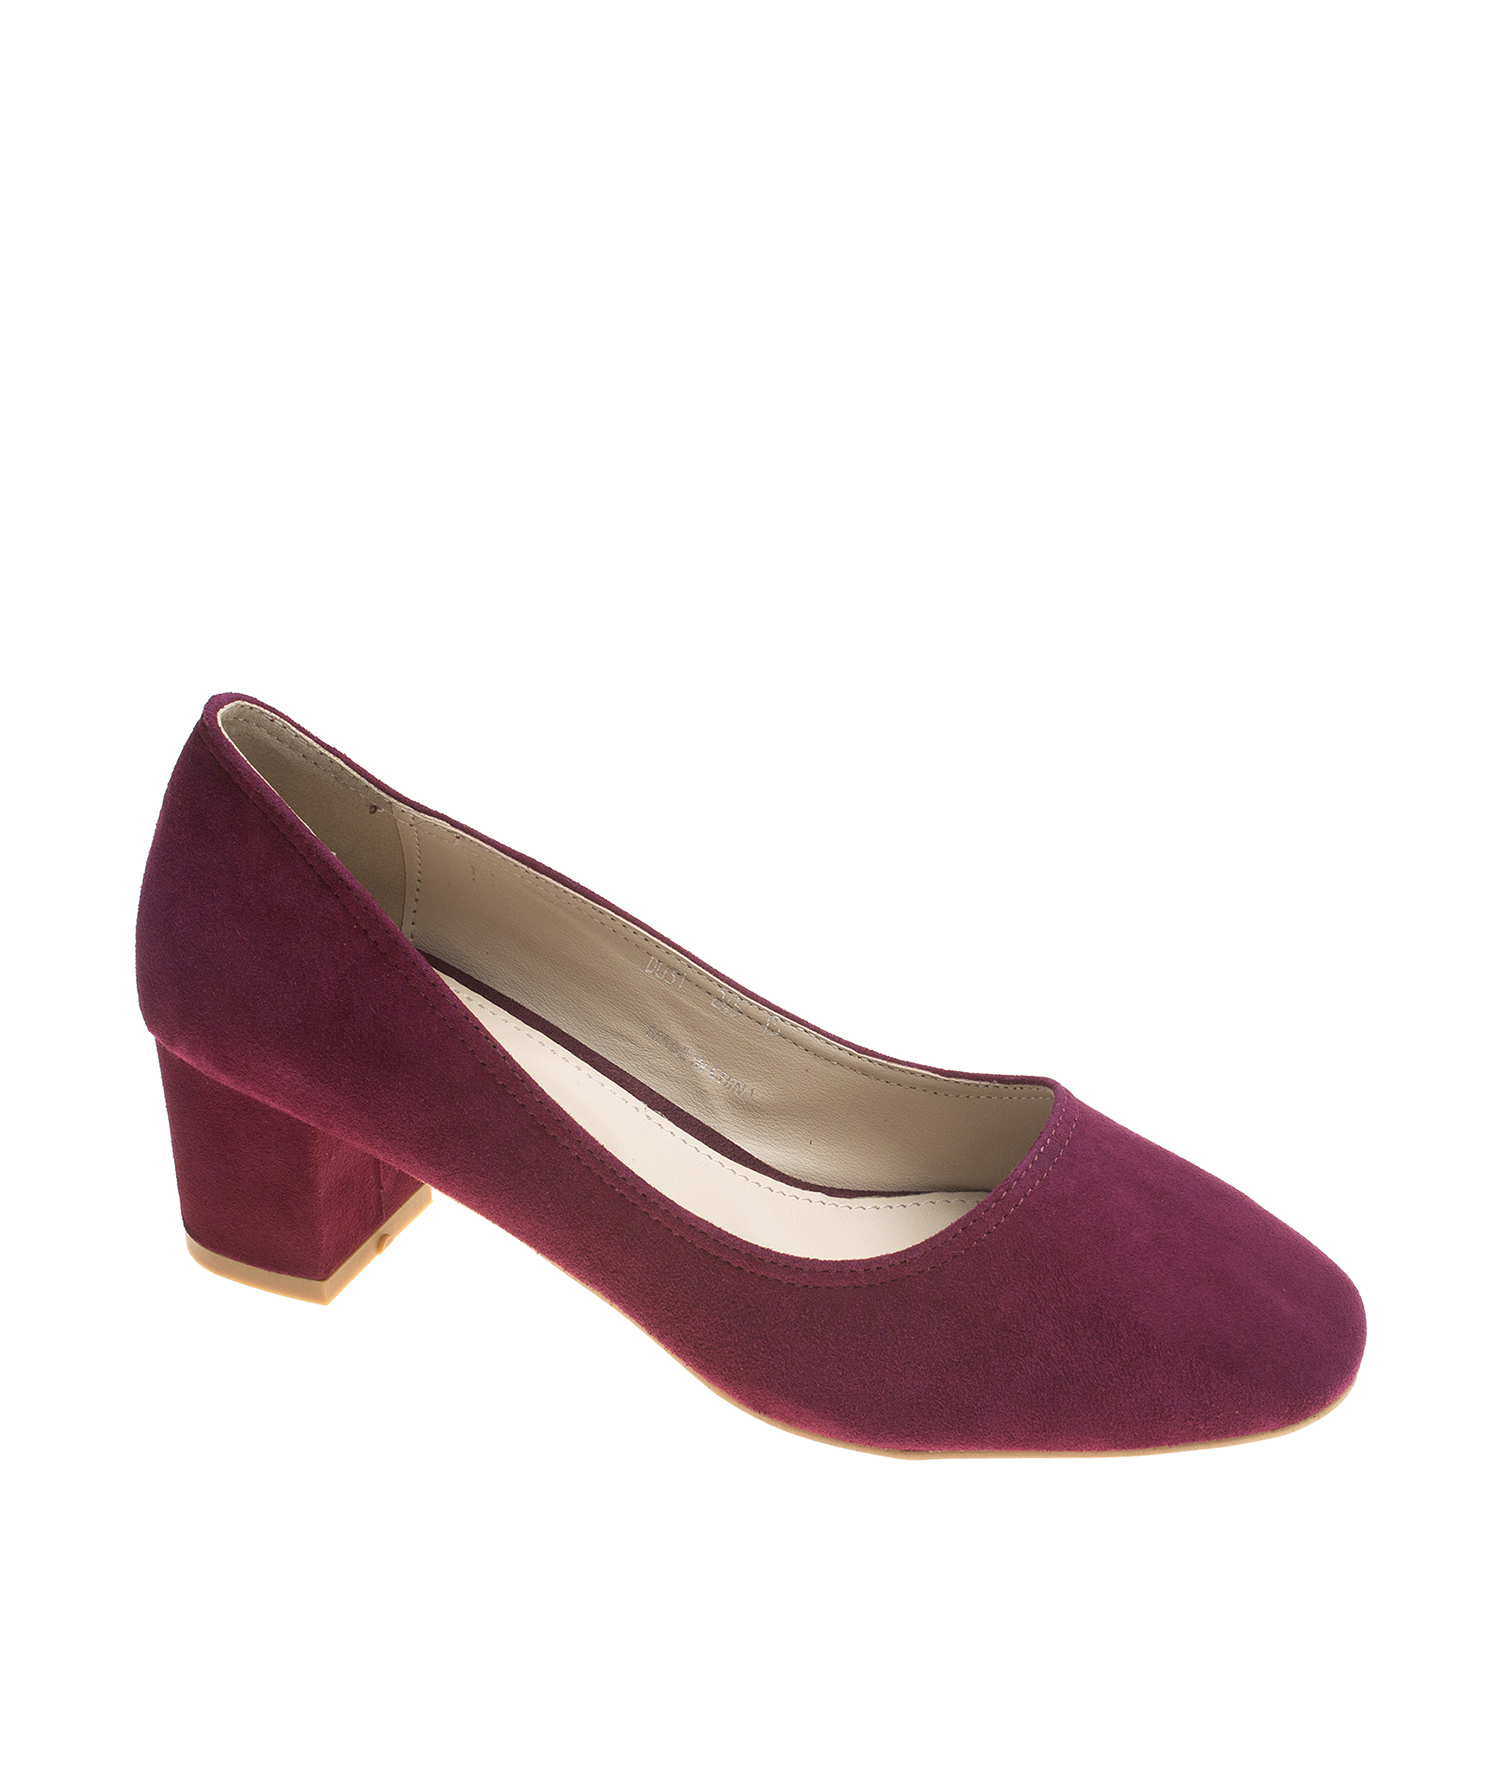 burgundy suede block heels